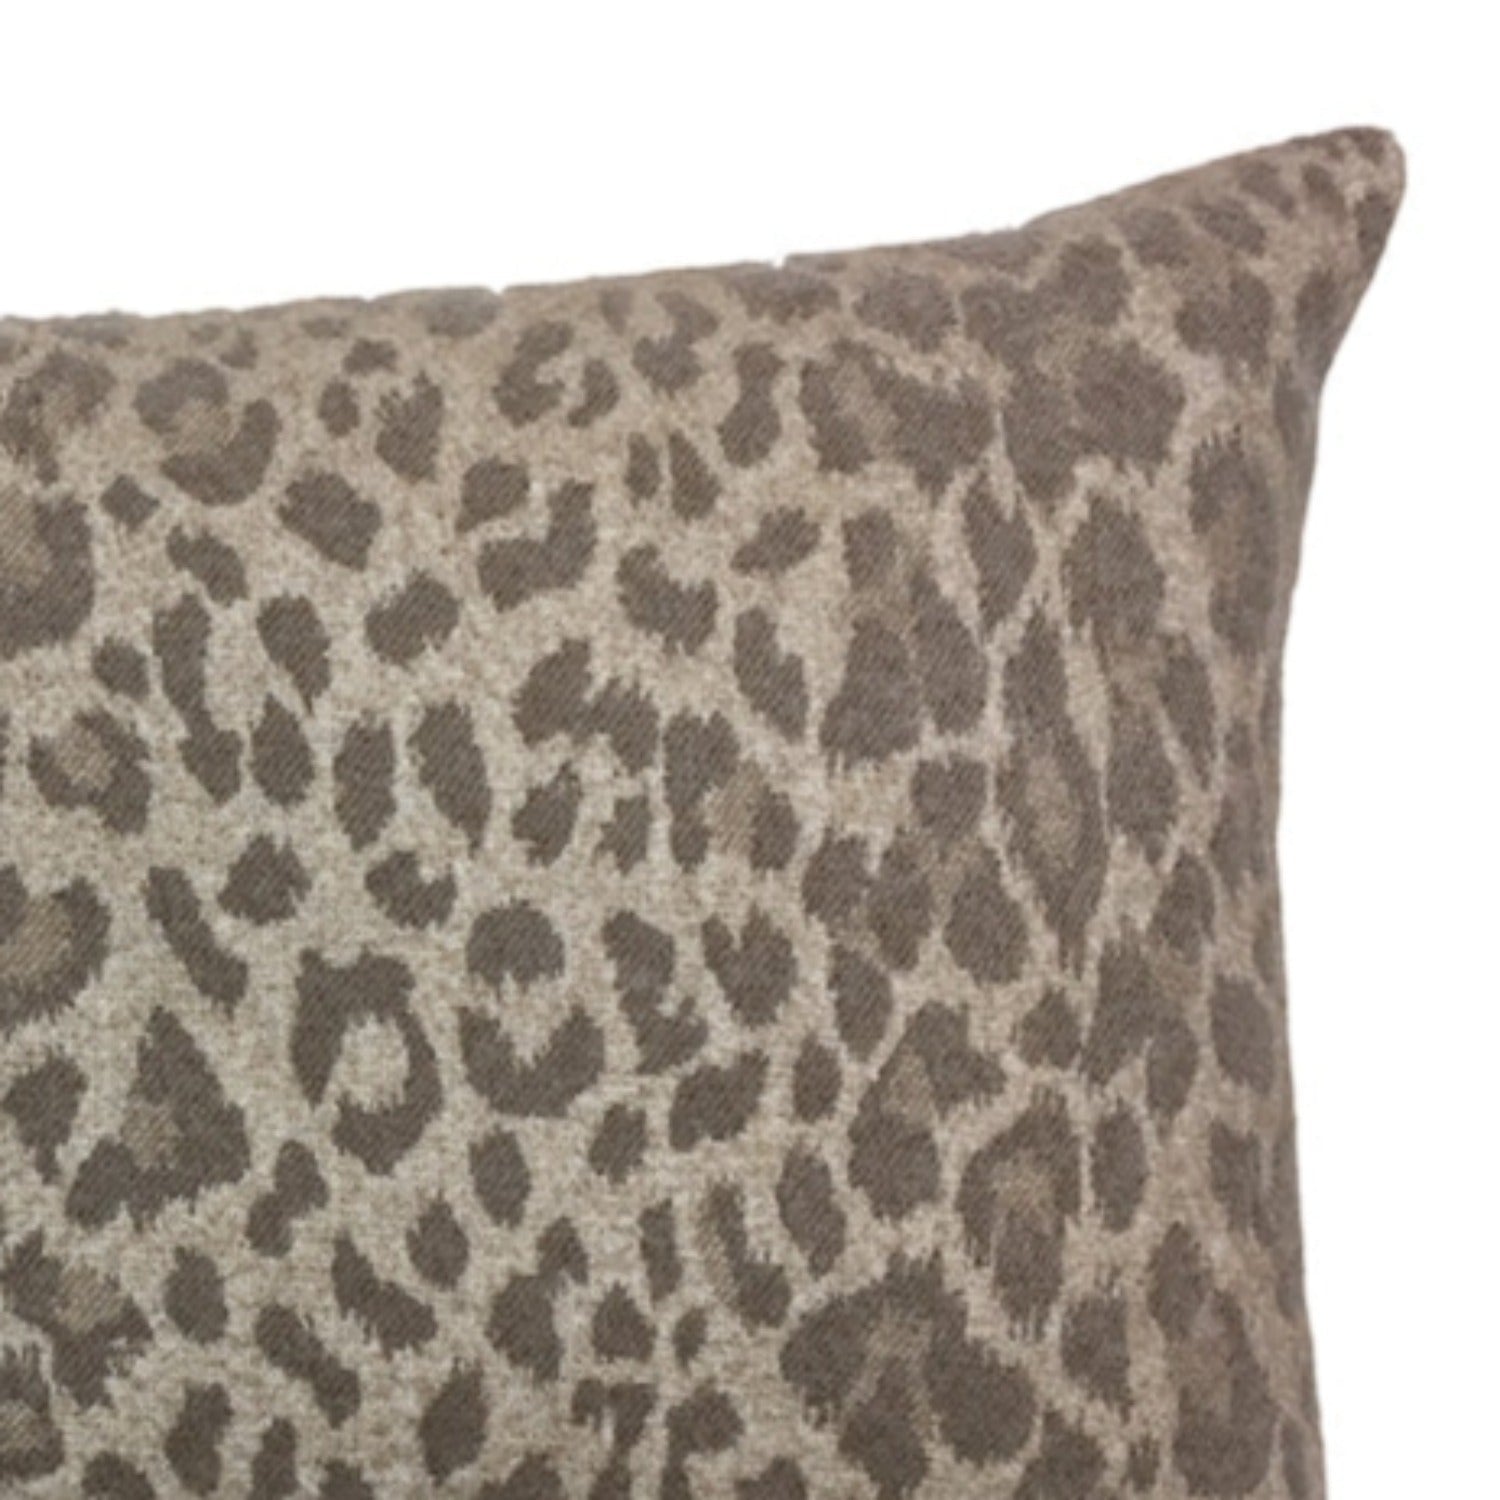 SALE! Elaine Smith 20 inch Square Outdoor Pillow - Silken Skin - Polyester Fiber Fill Throw Pillows 12031008